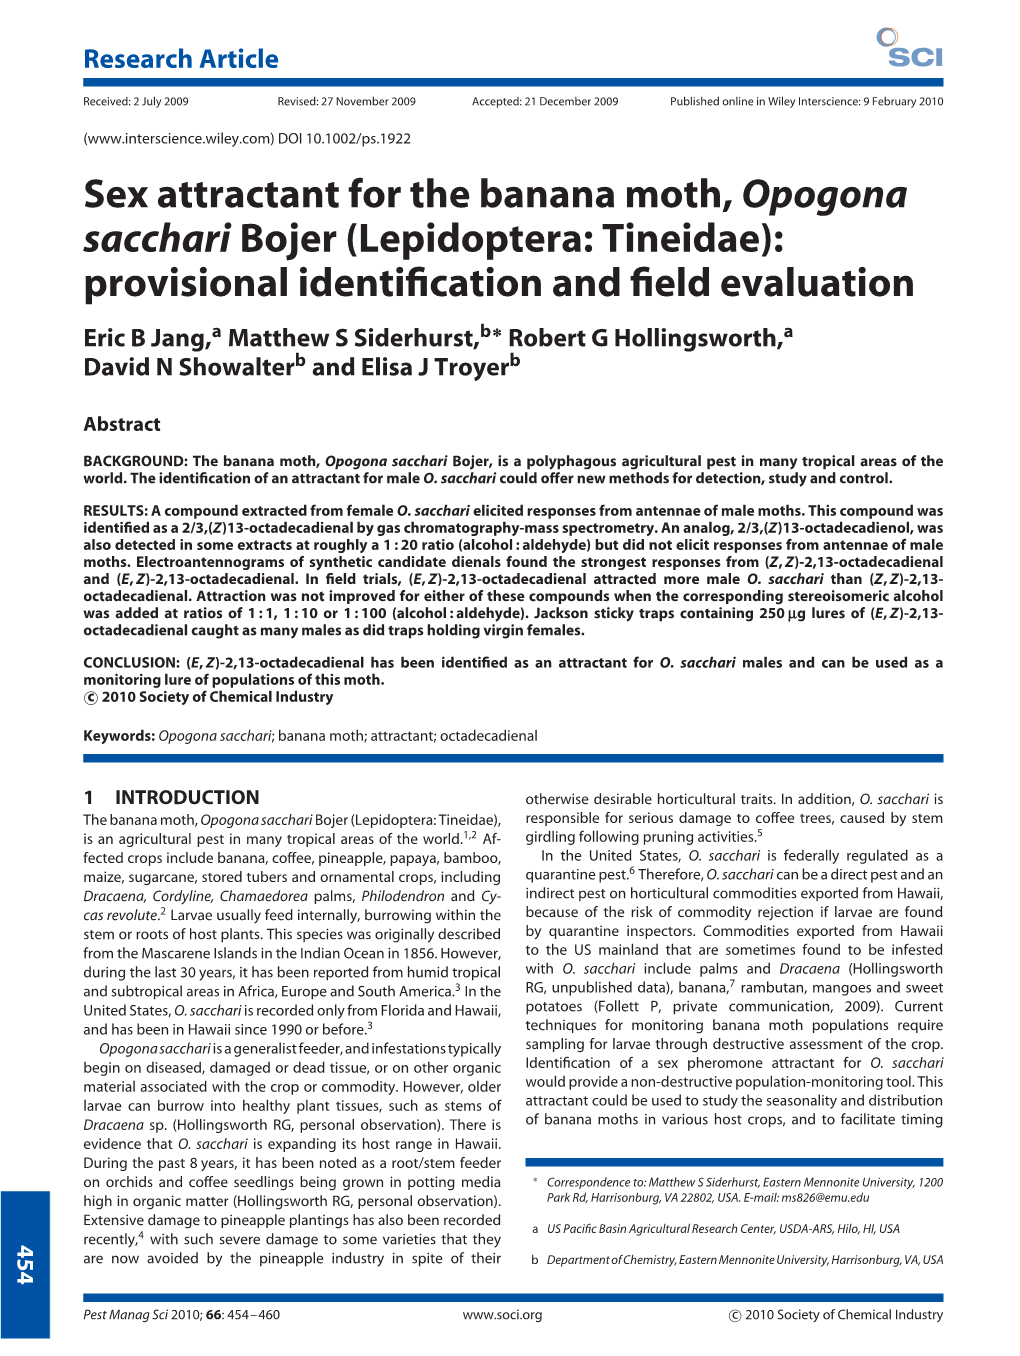 Sex Attractant for the Banana Moth, Opogona Sacchari Bojer